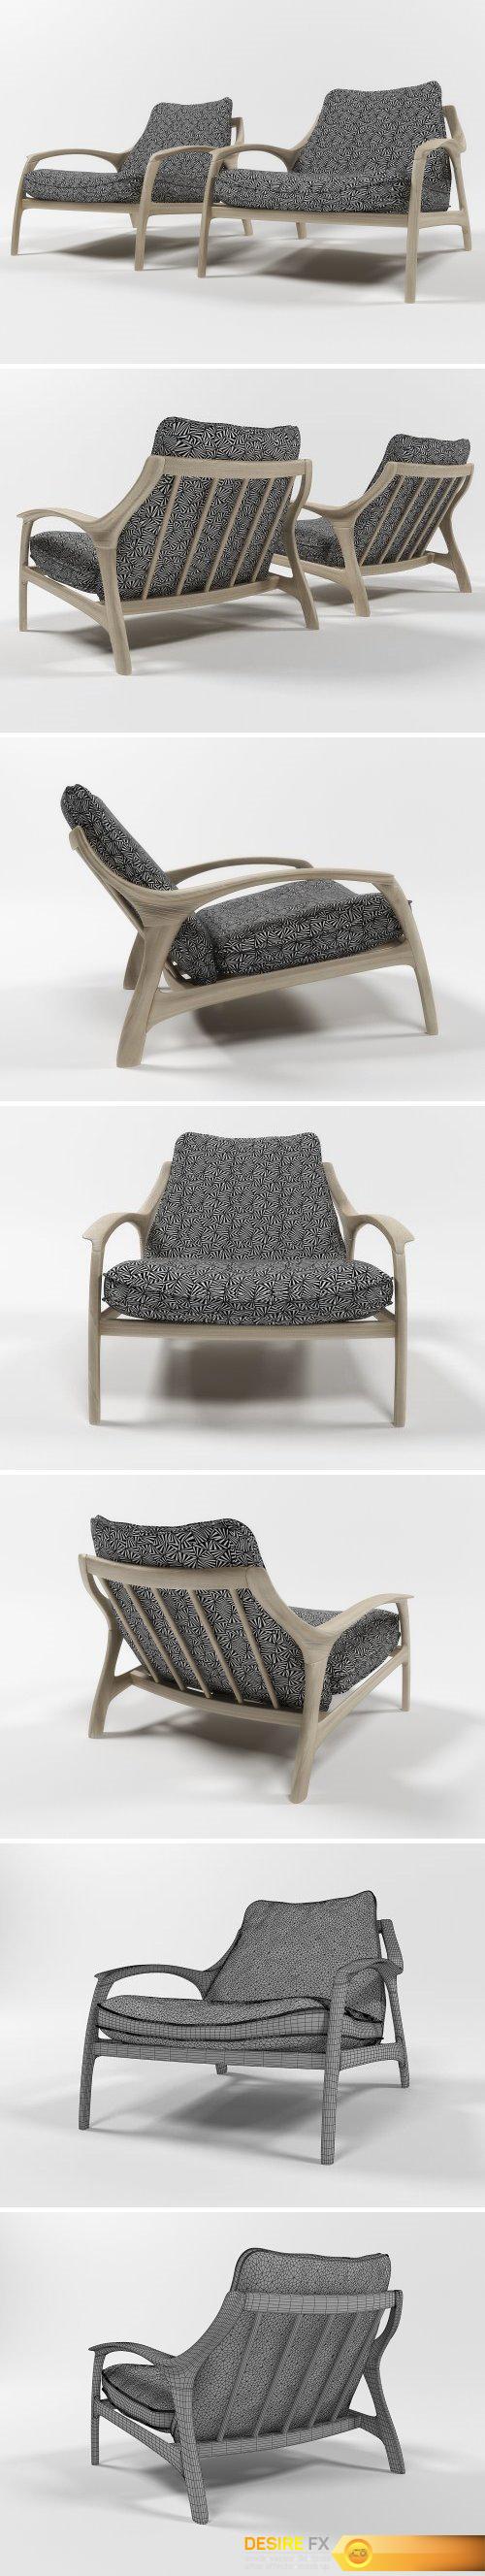 CM - Sequilla armchair by inDahouze 1602657